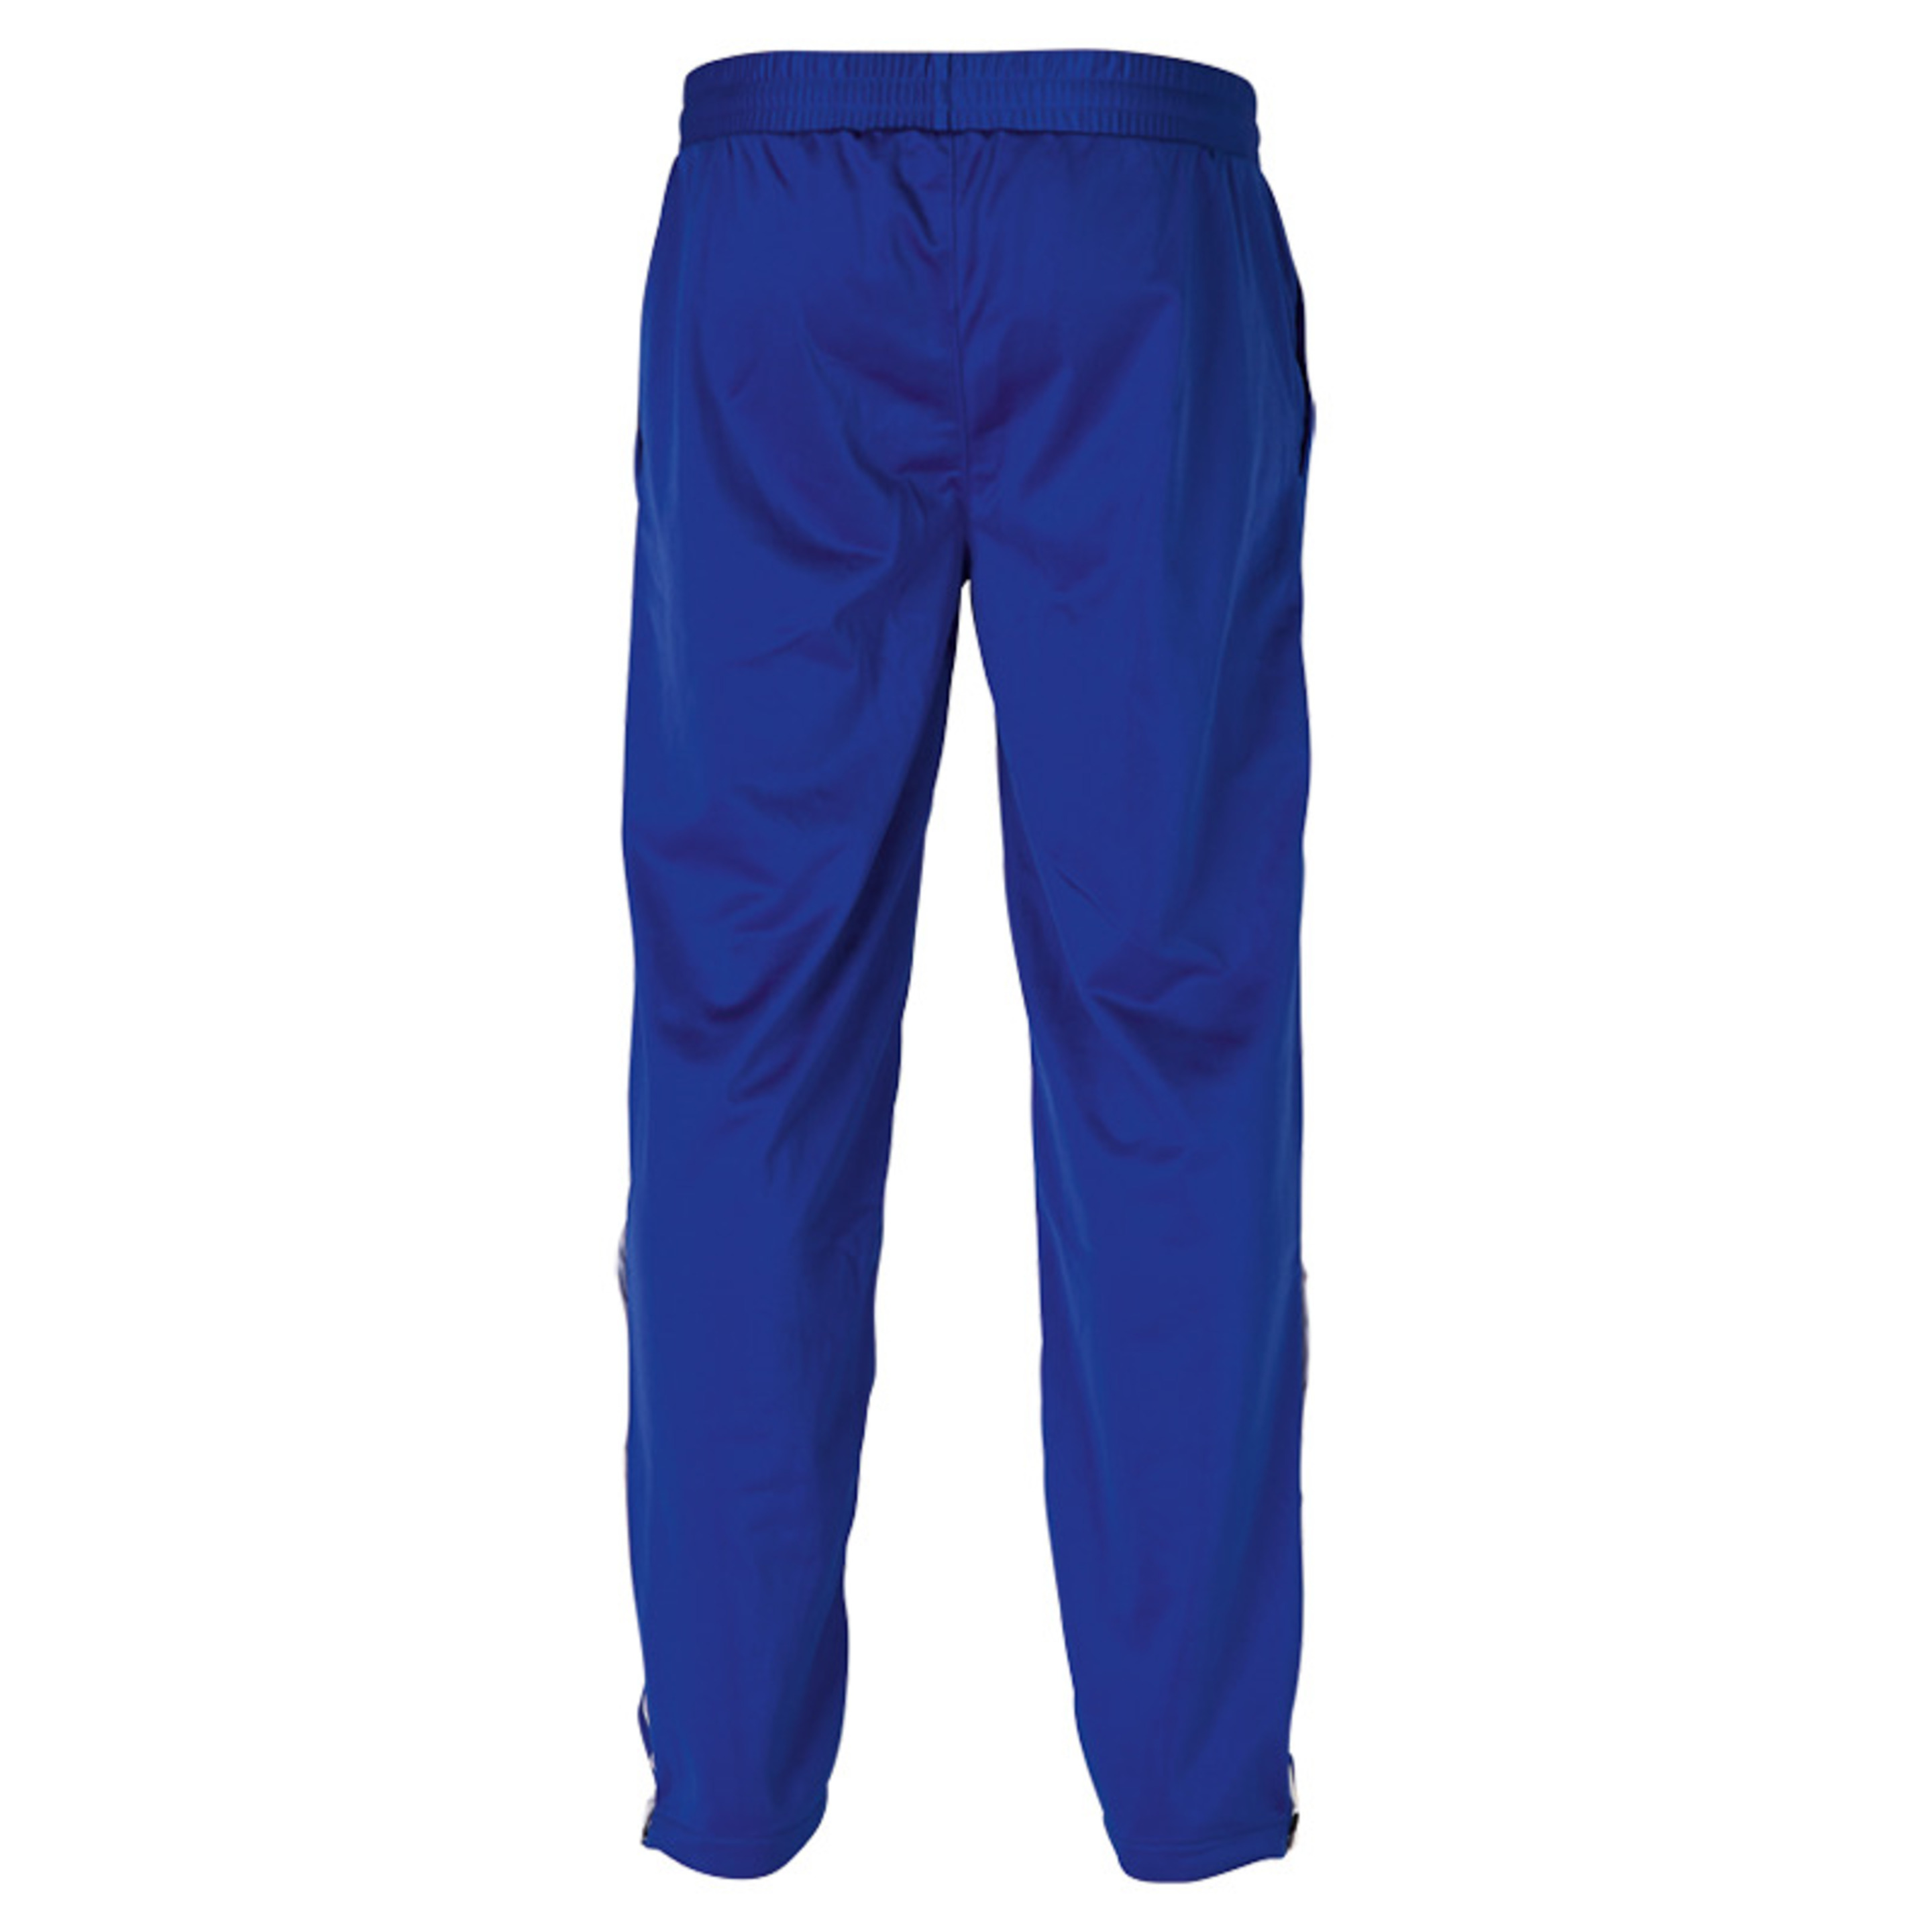 Team Warm Up Pants Blue Spalding